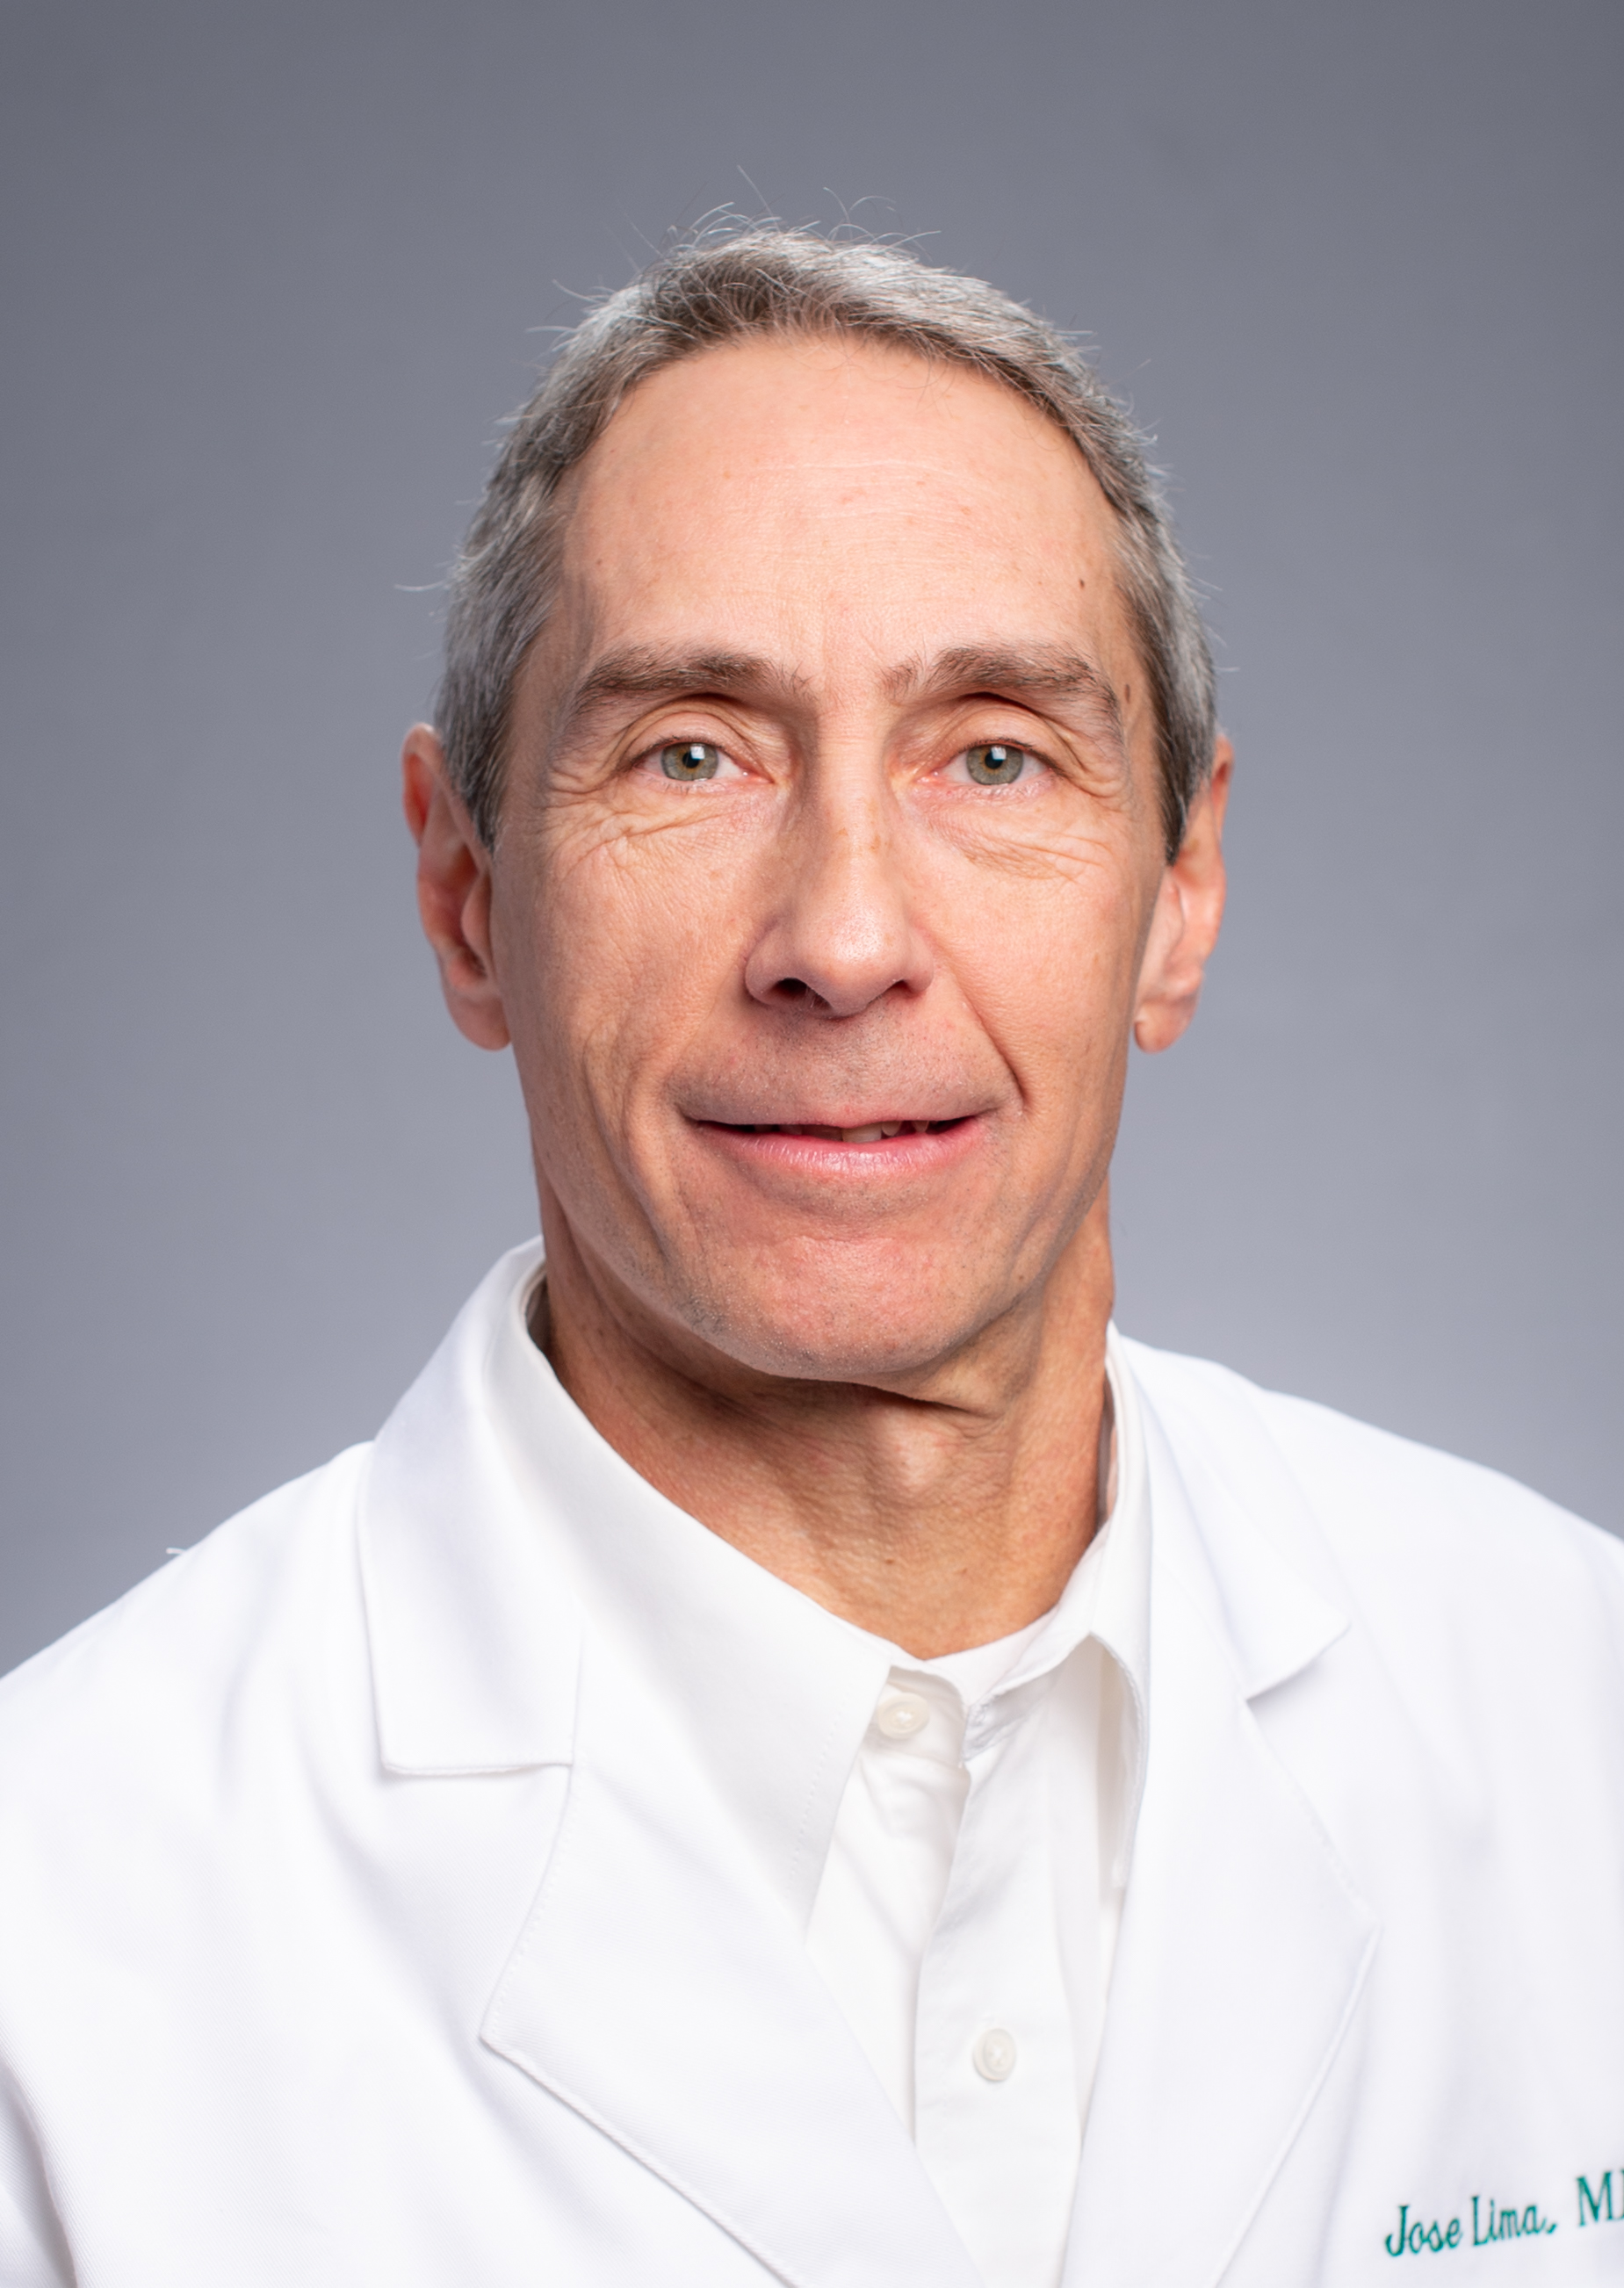 Headshot of Jose Lima (Assistant Professor, Laboratory Medicine) in white medical coat, 2020.